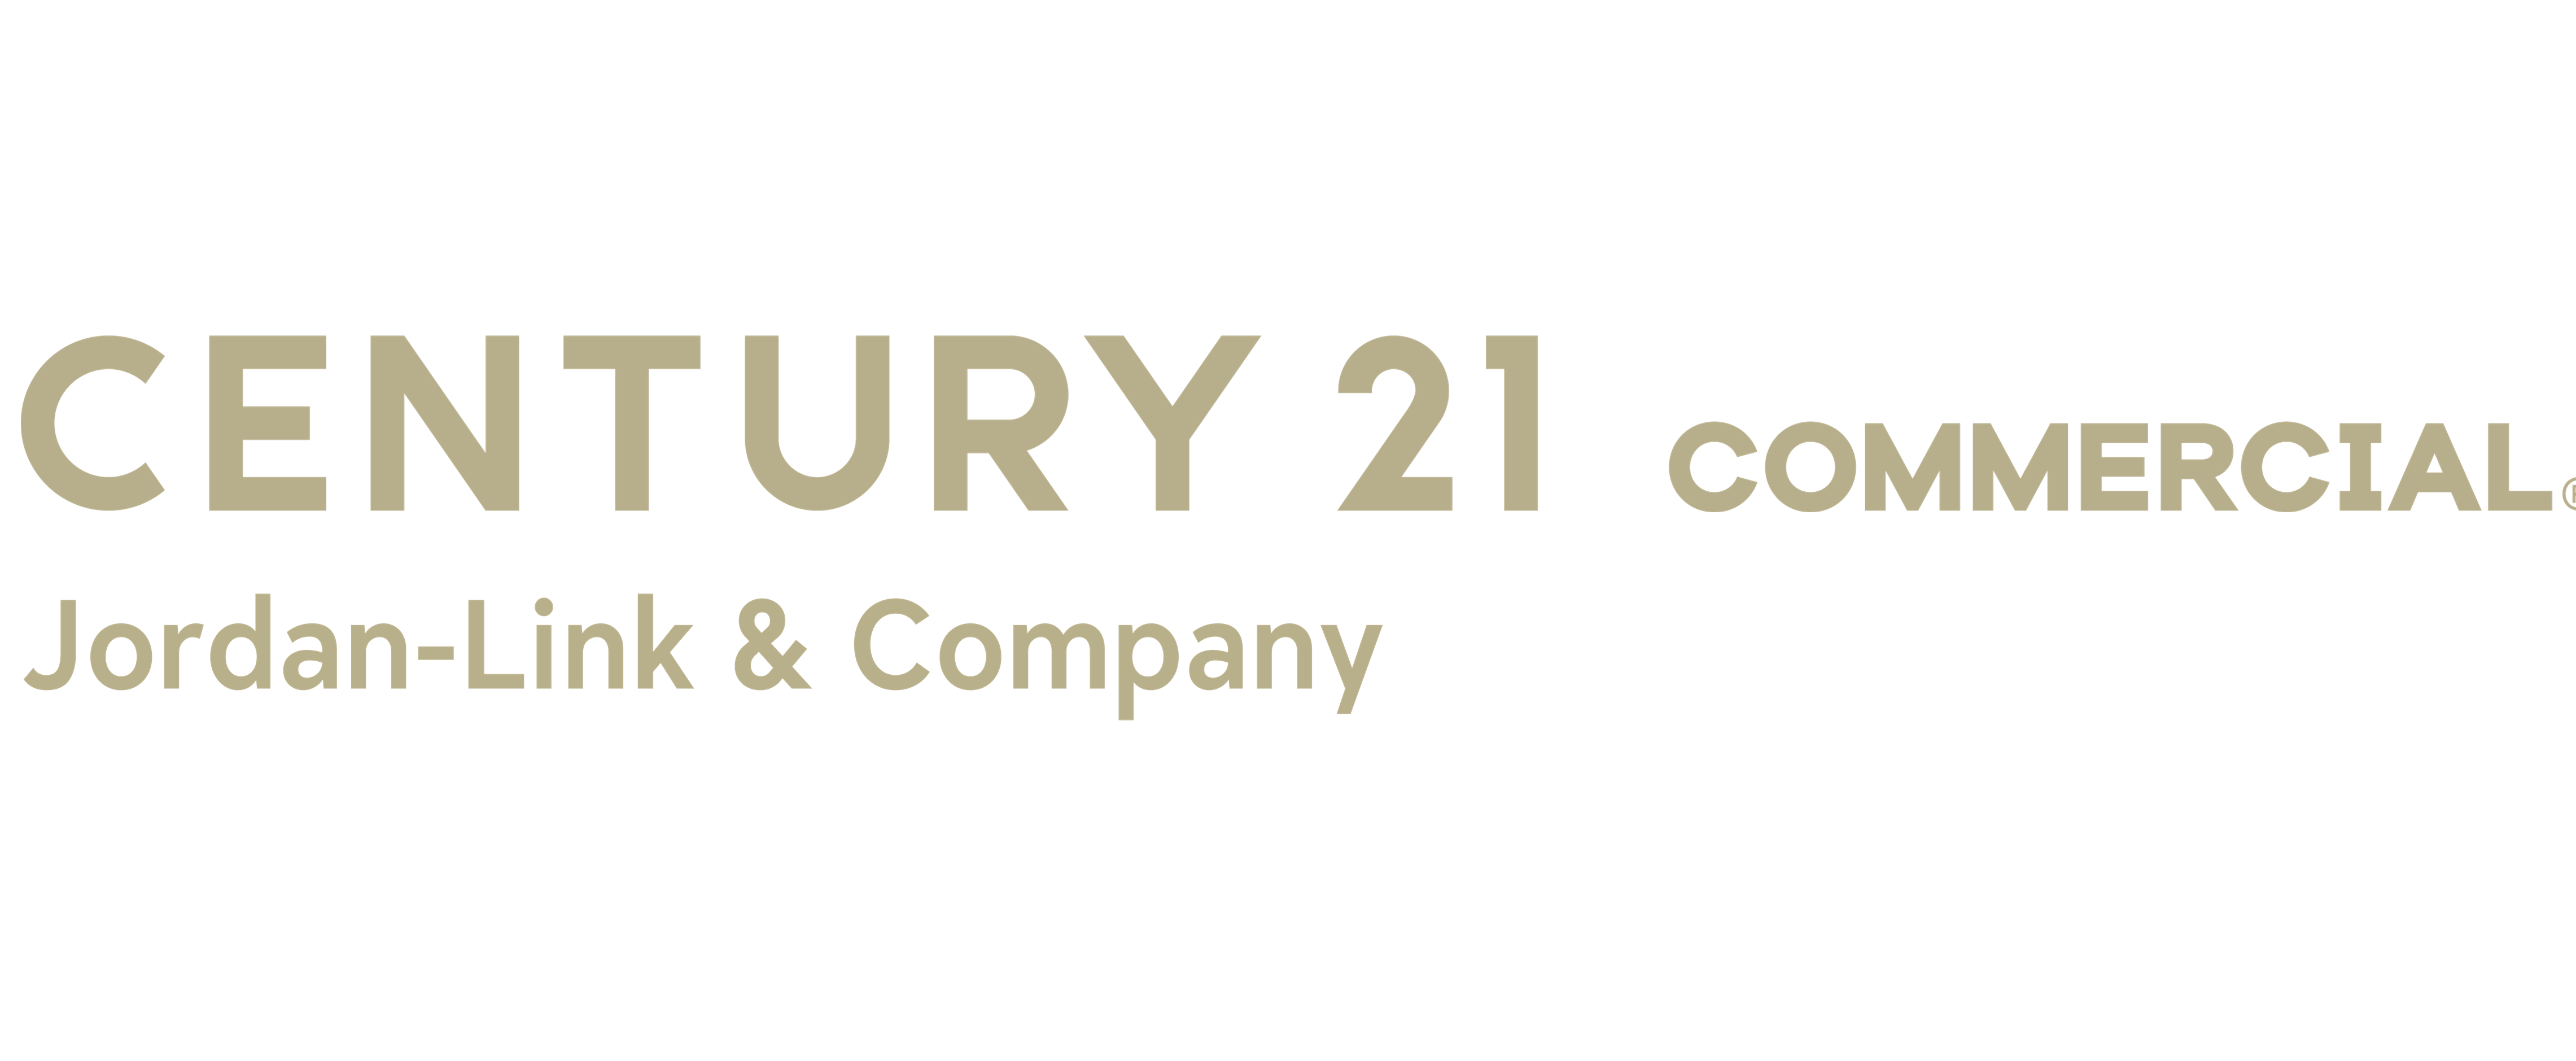 century 21 commercial logo